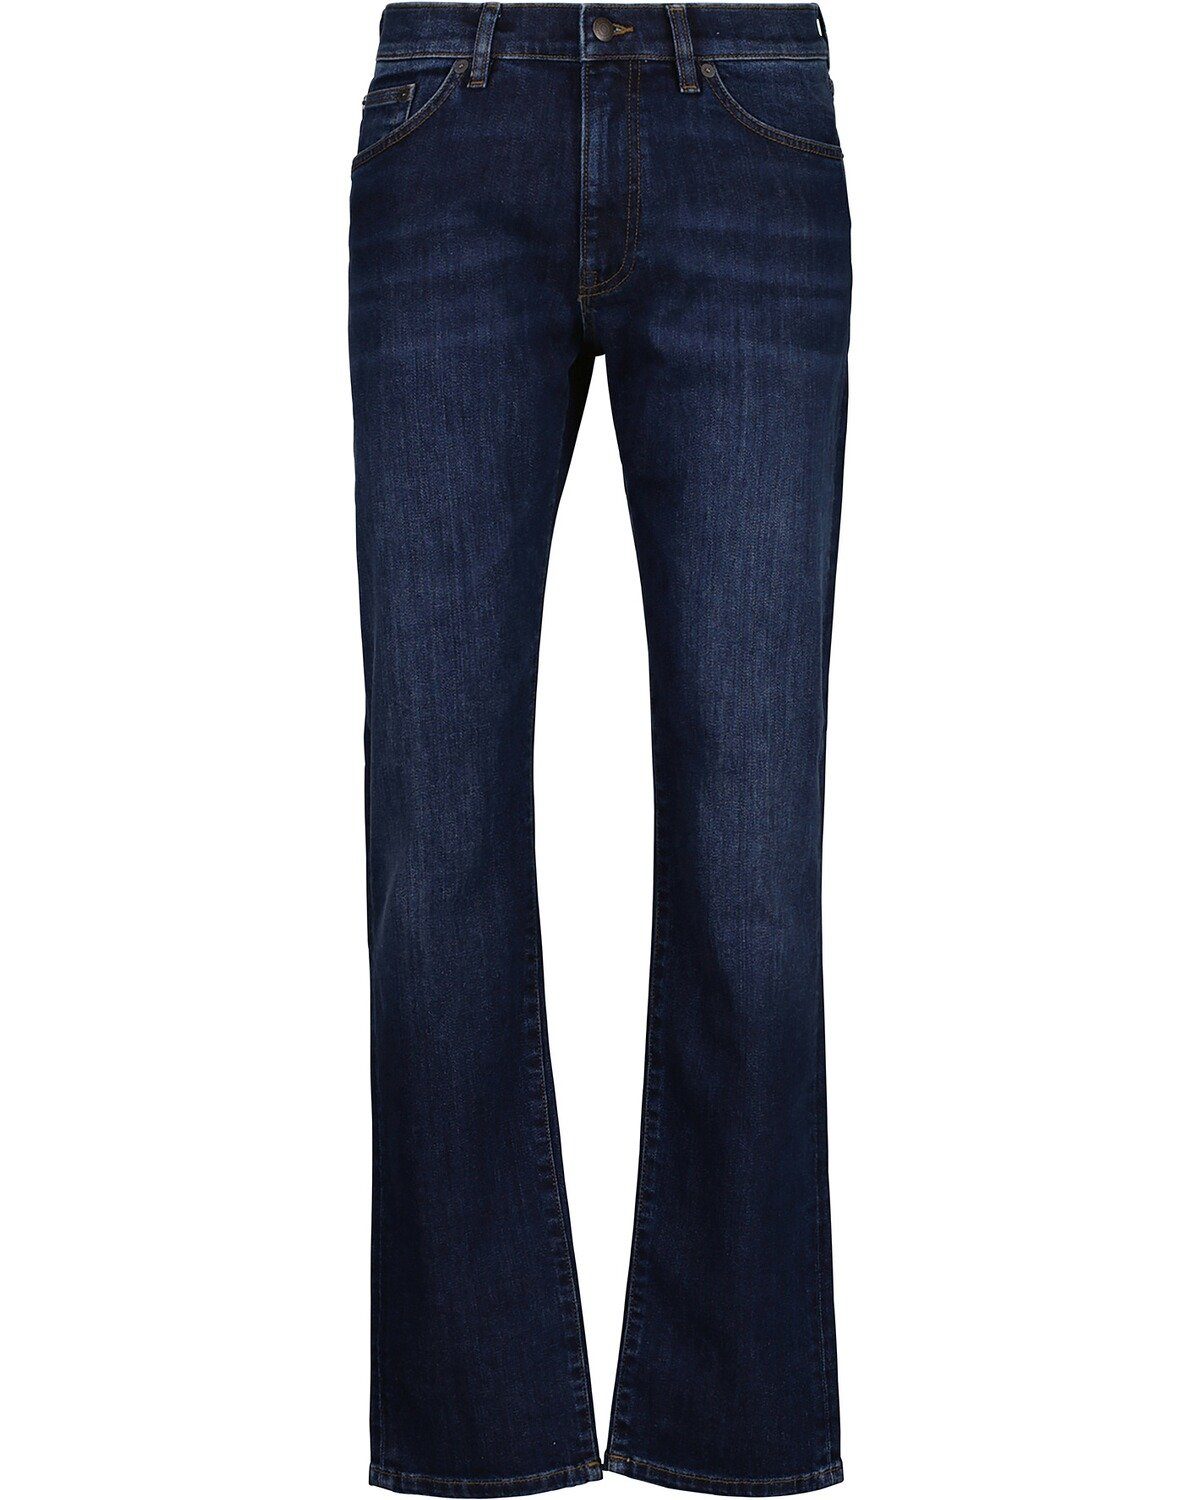 Gant 5-Pocket-Jeans Jeans Slim Fit Dark Blue Worn In